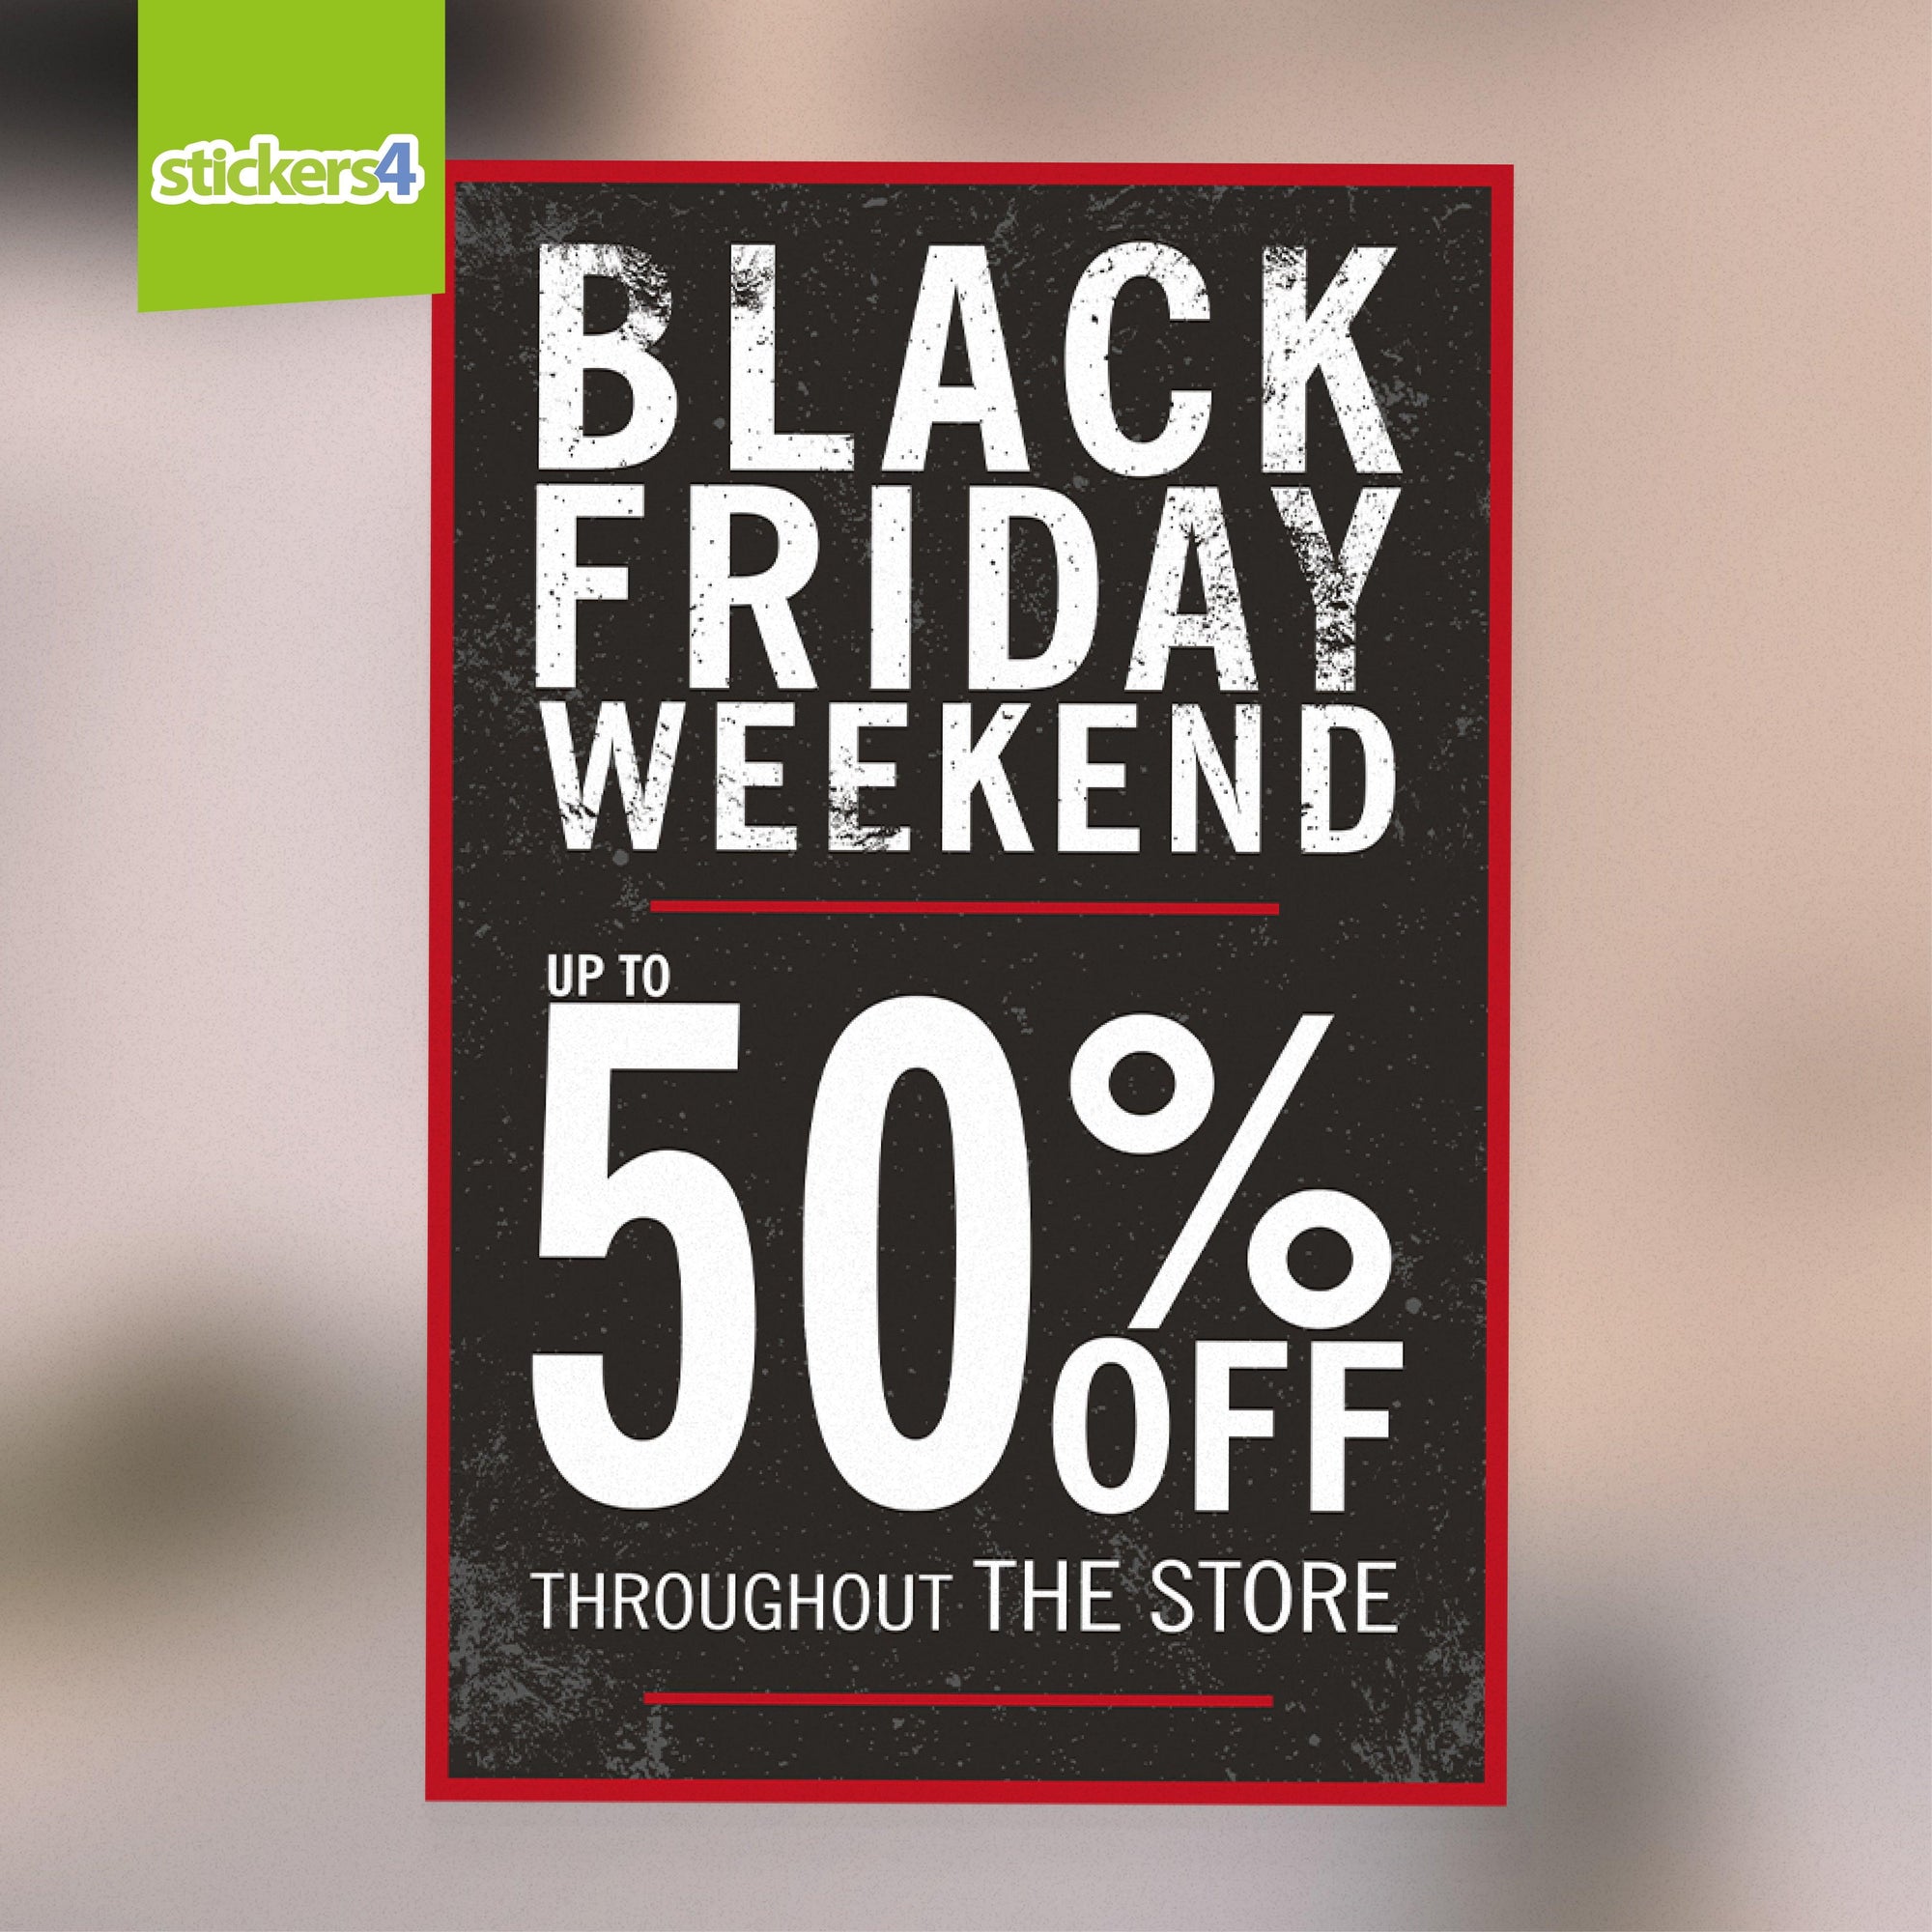 Black Friday Weekend Window Cling Sticker Retail Window Display